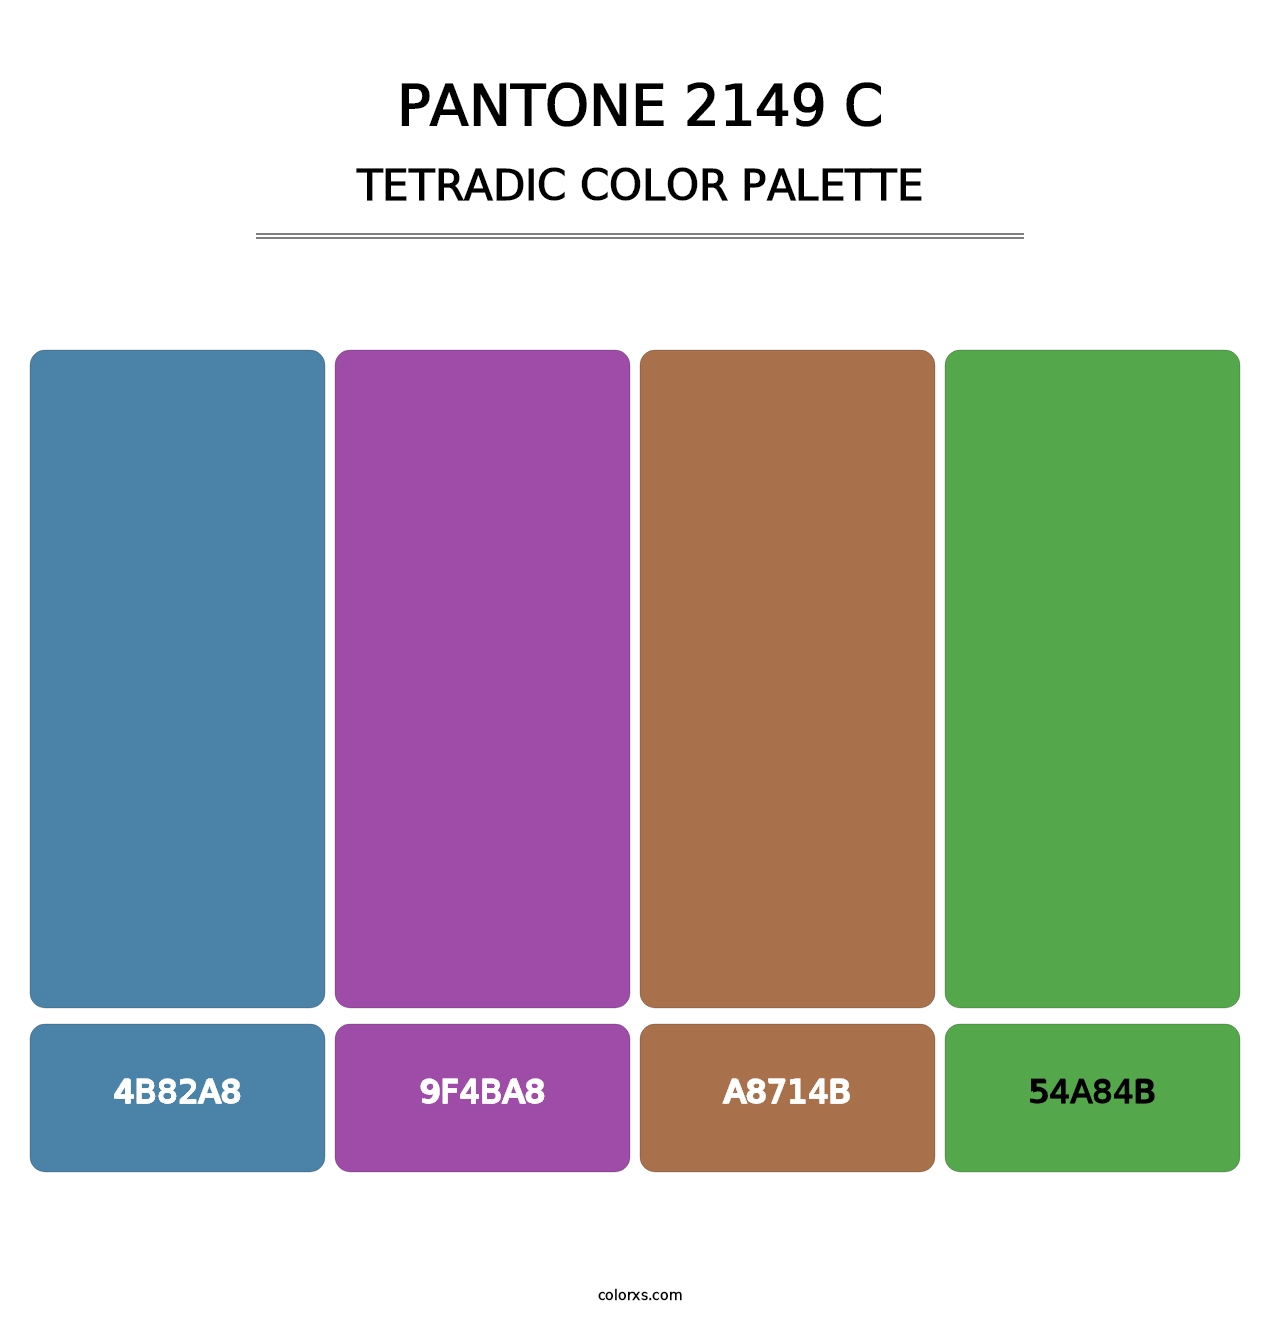 PANTONE 2149 C - Tetradic Color Palette